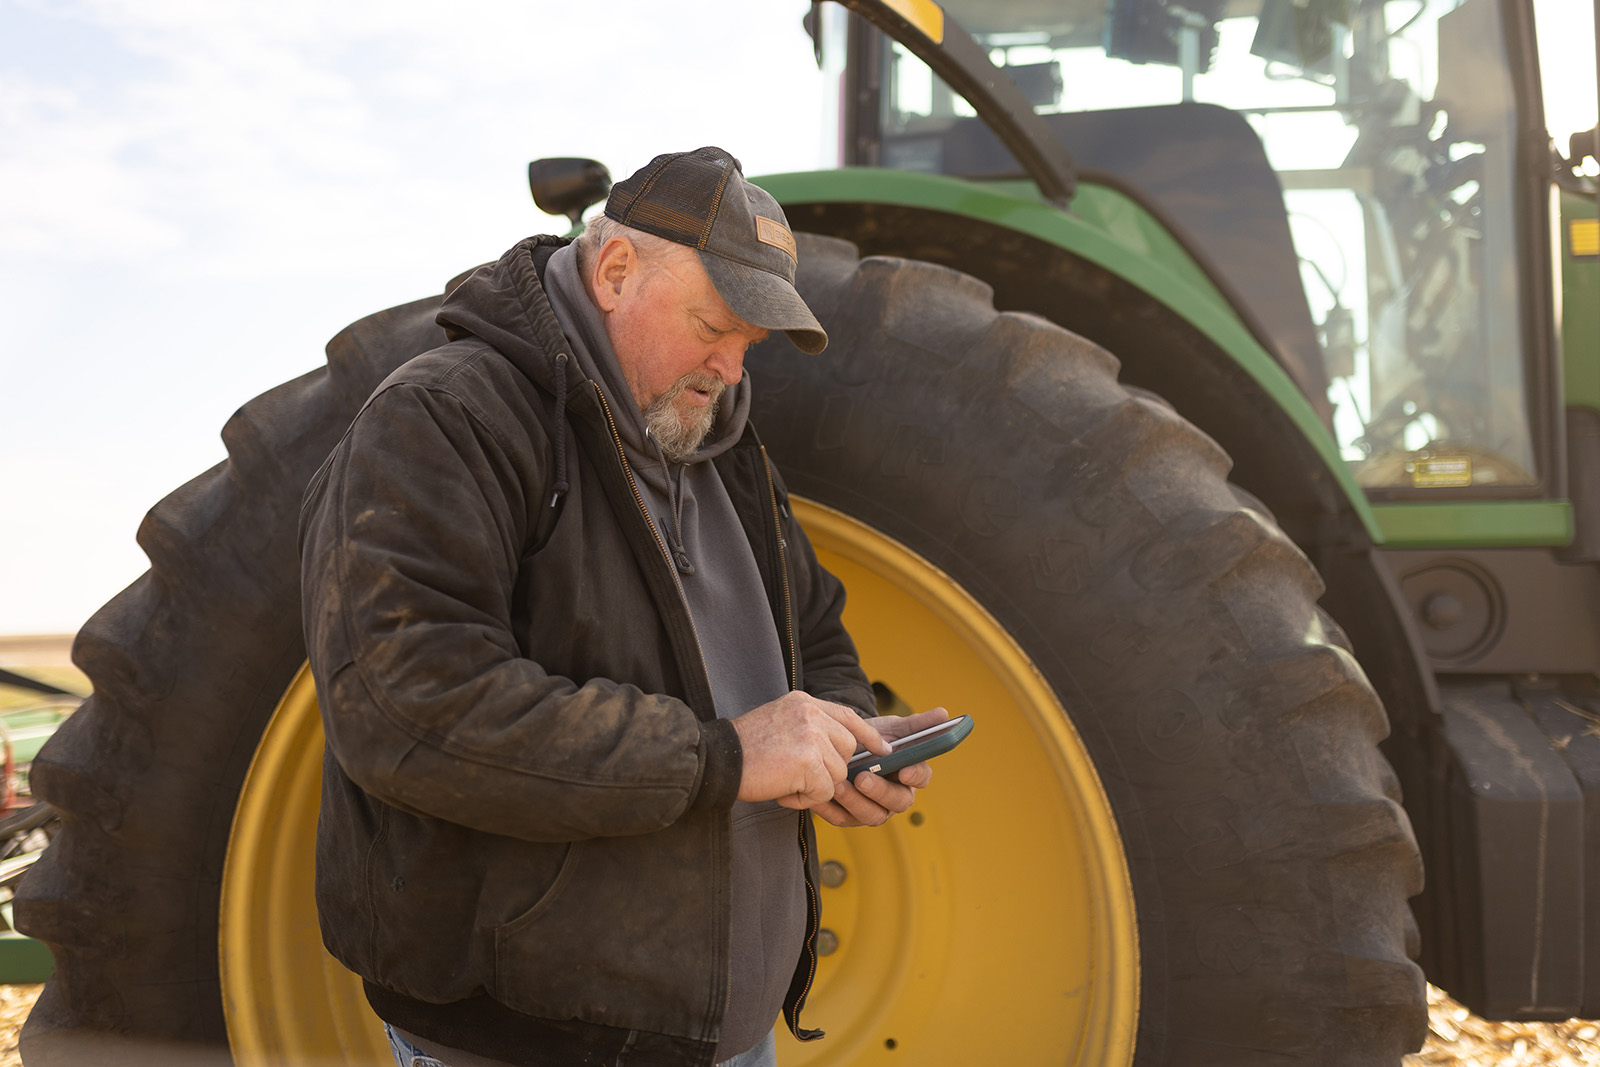 Farmer member accessing survey on phone